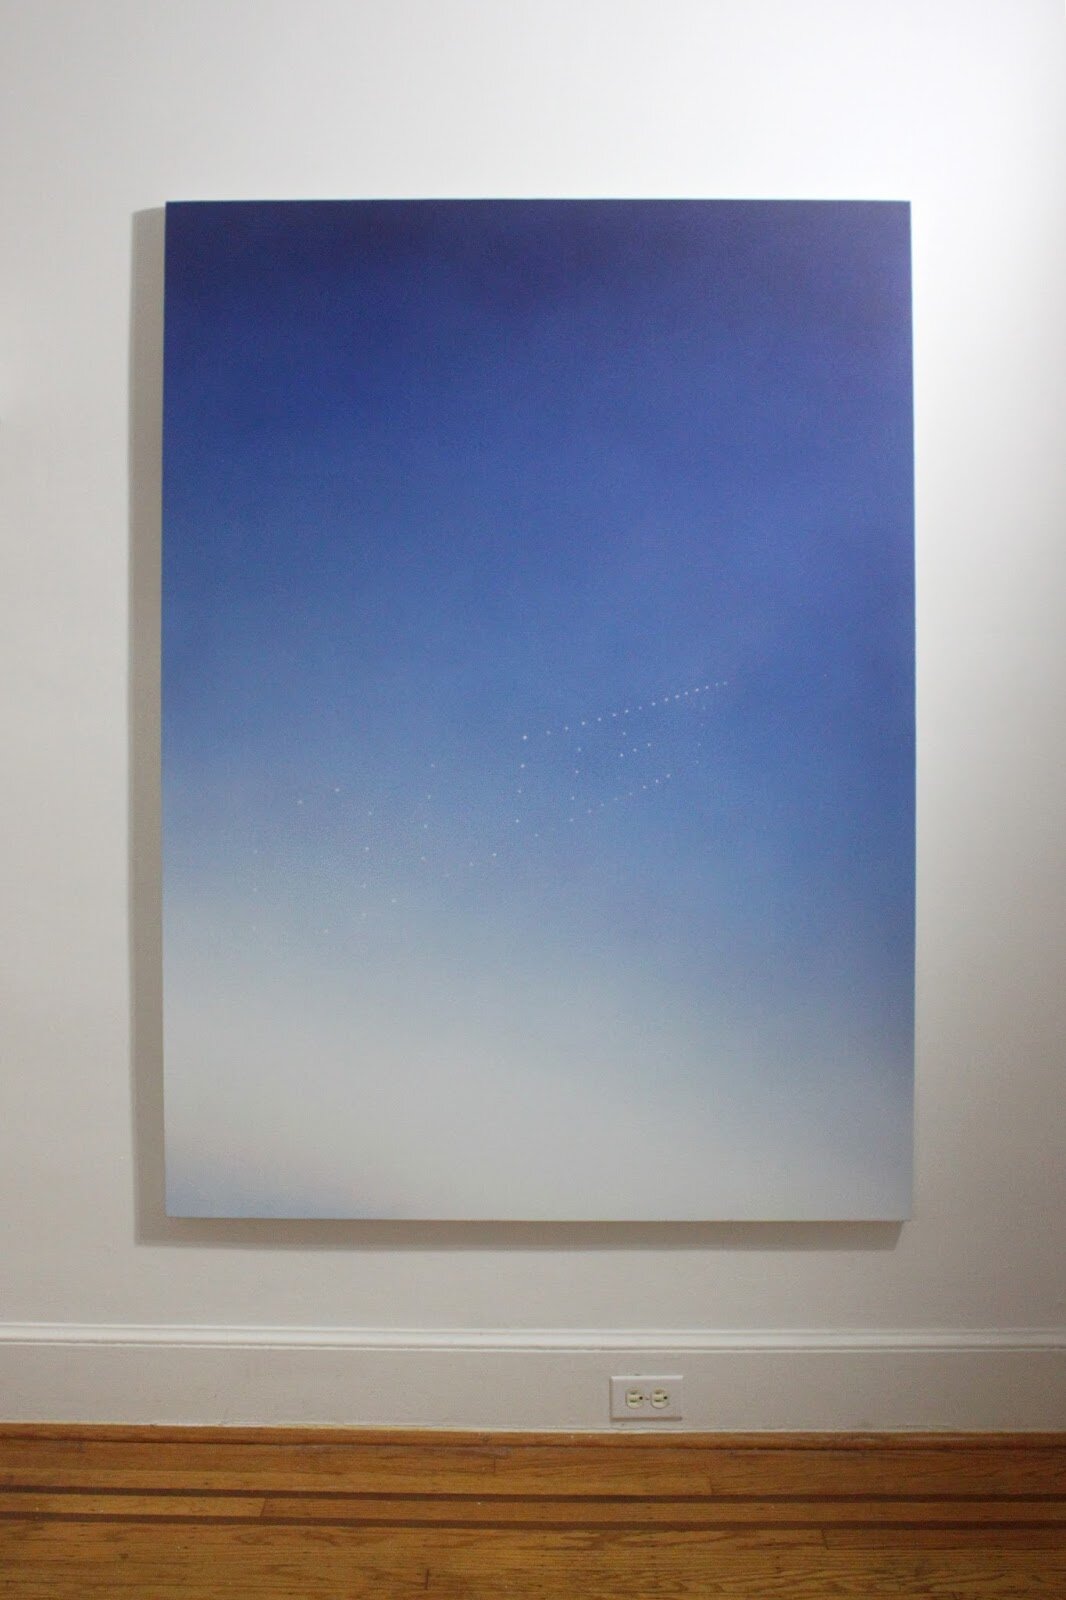   Skywriting (QUIET)  (acrylic on canvas) 2015 